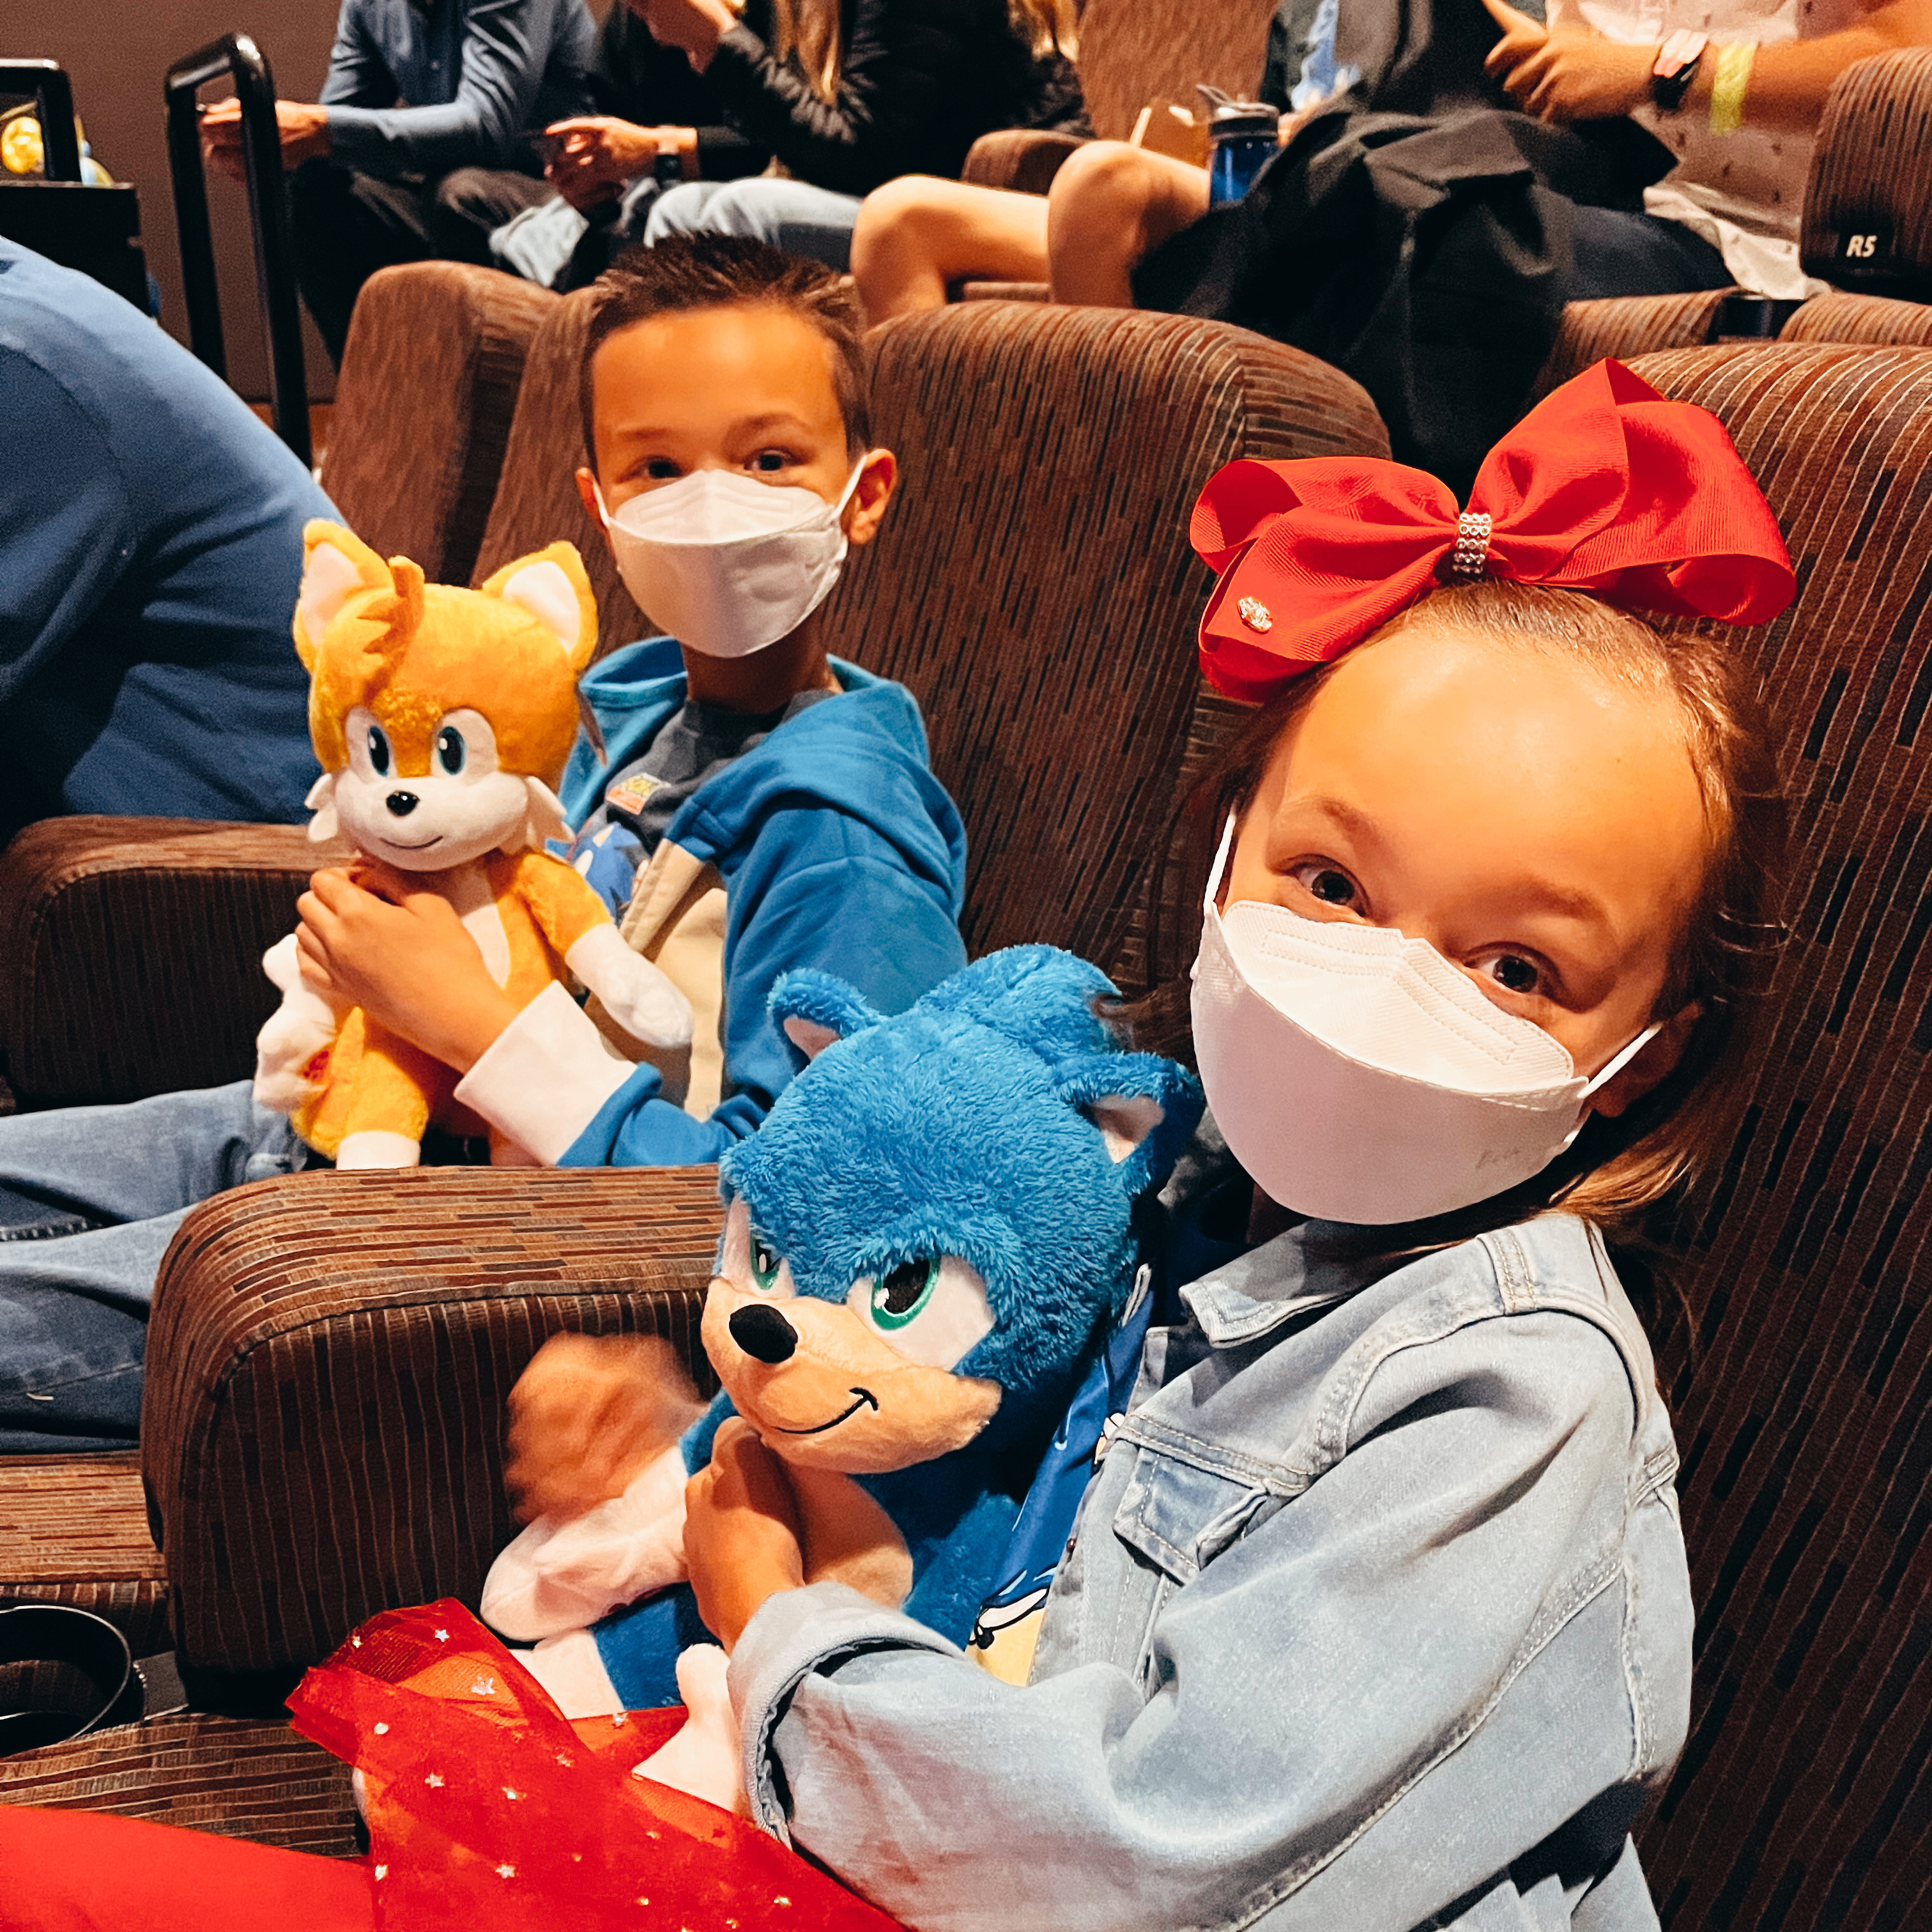 Sonic 2 Movie Toddler Costume